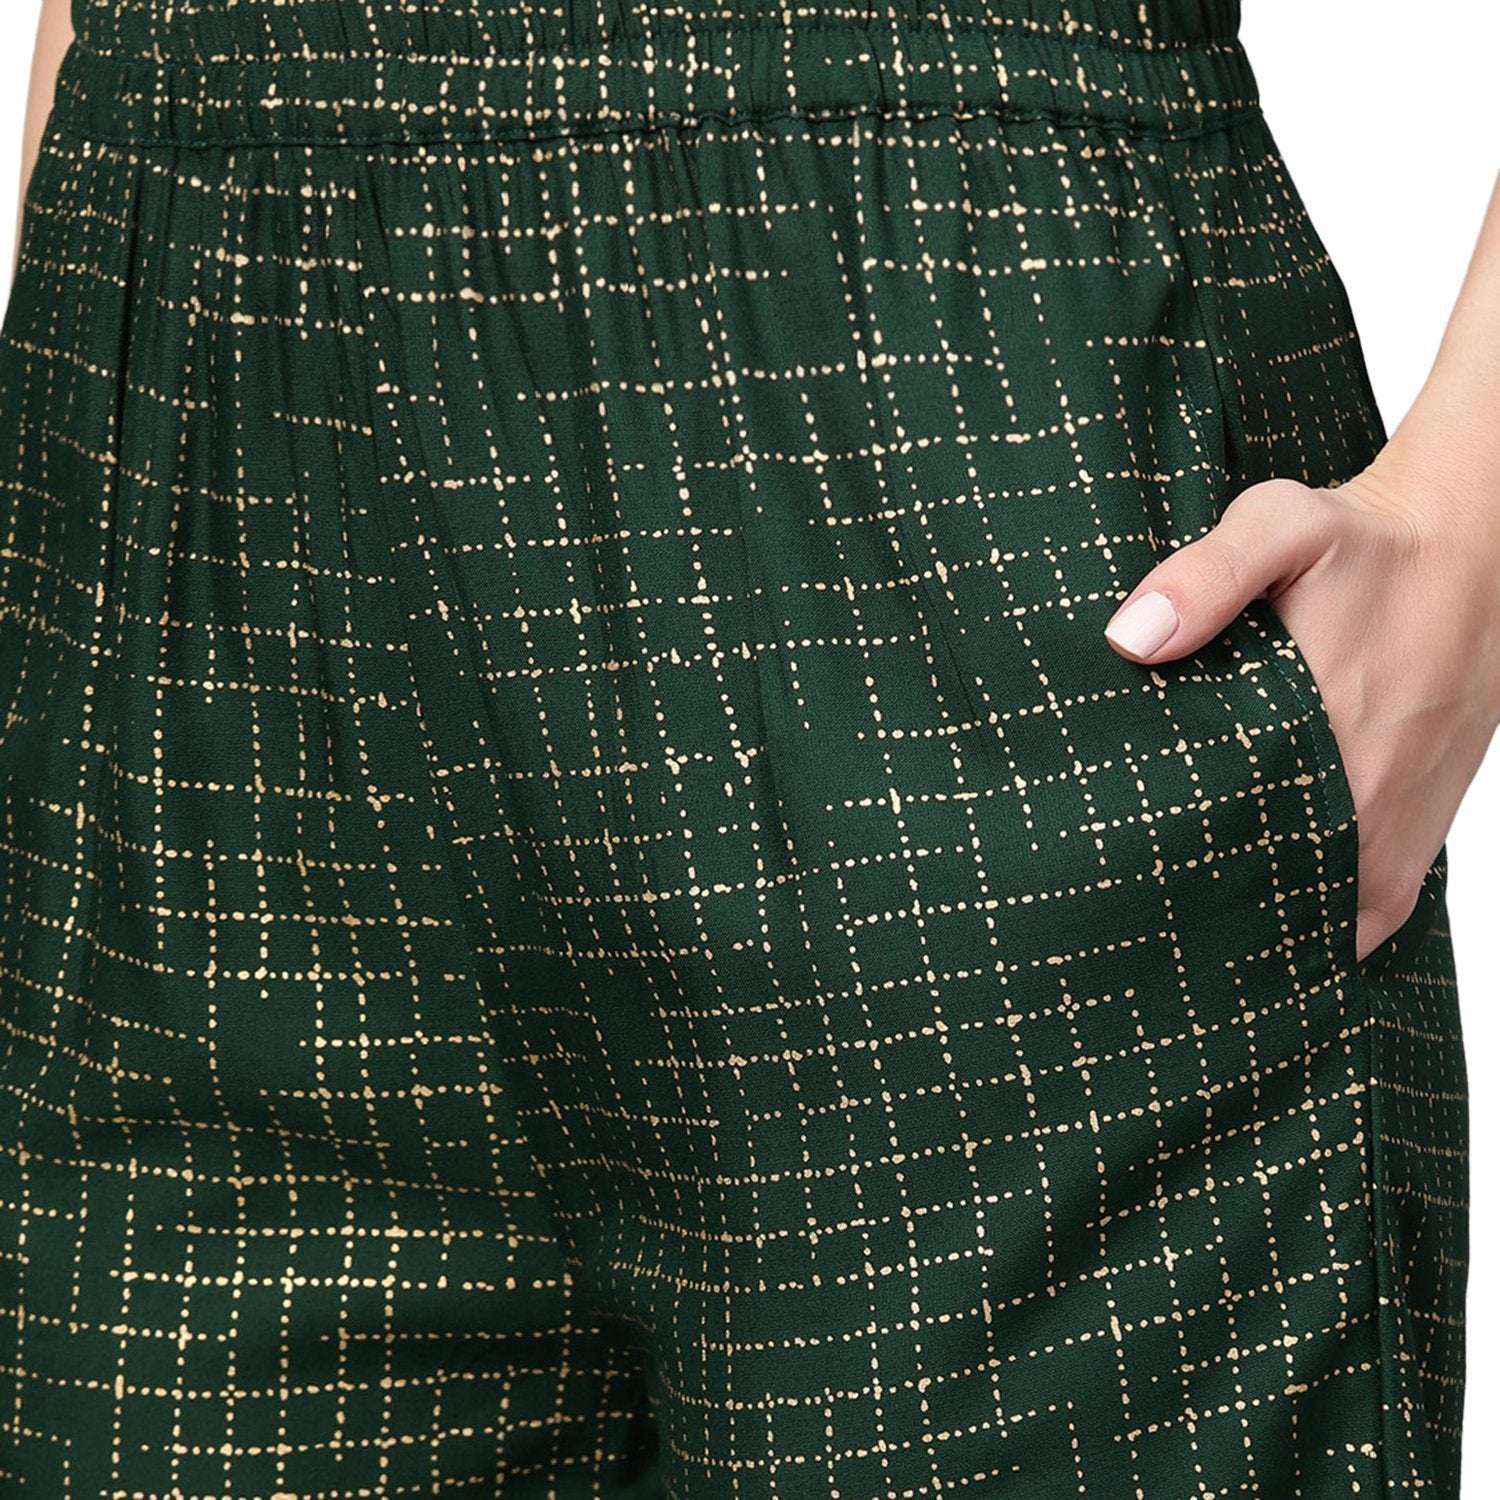 Women's Green Rayon Solid Half Sleeve Casual Kurta Palazzo - Myshka